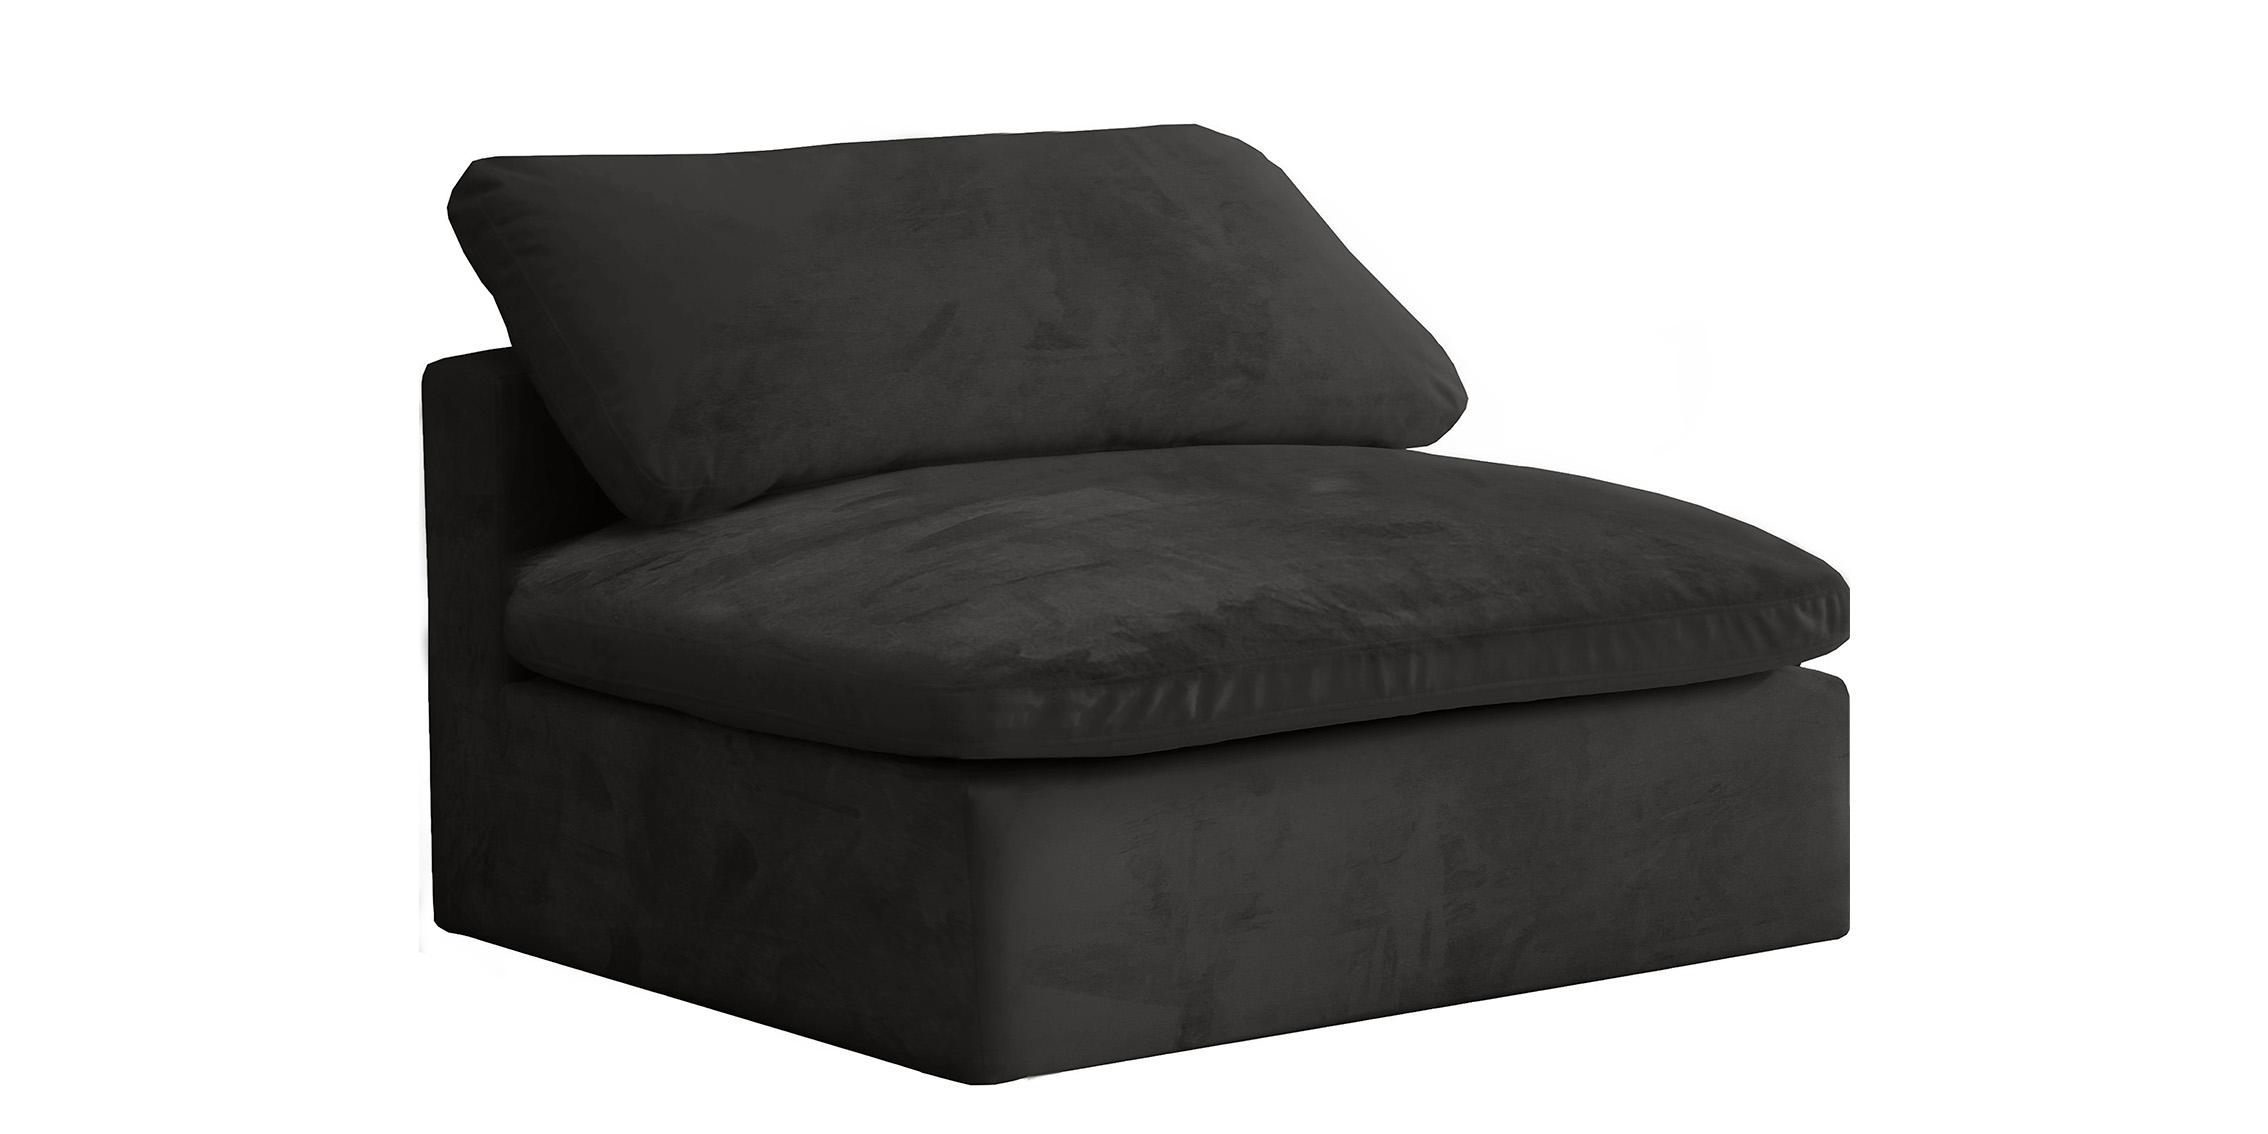 Contemporary, Modern Armless Chair 634Black-Armless 634Black-Armless in Black Fabric